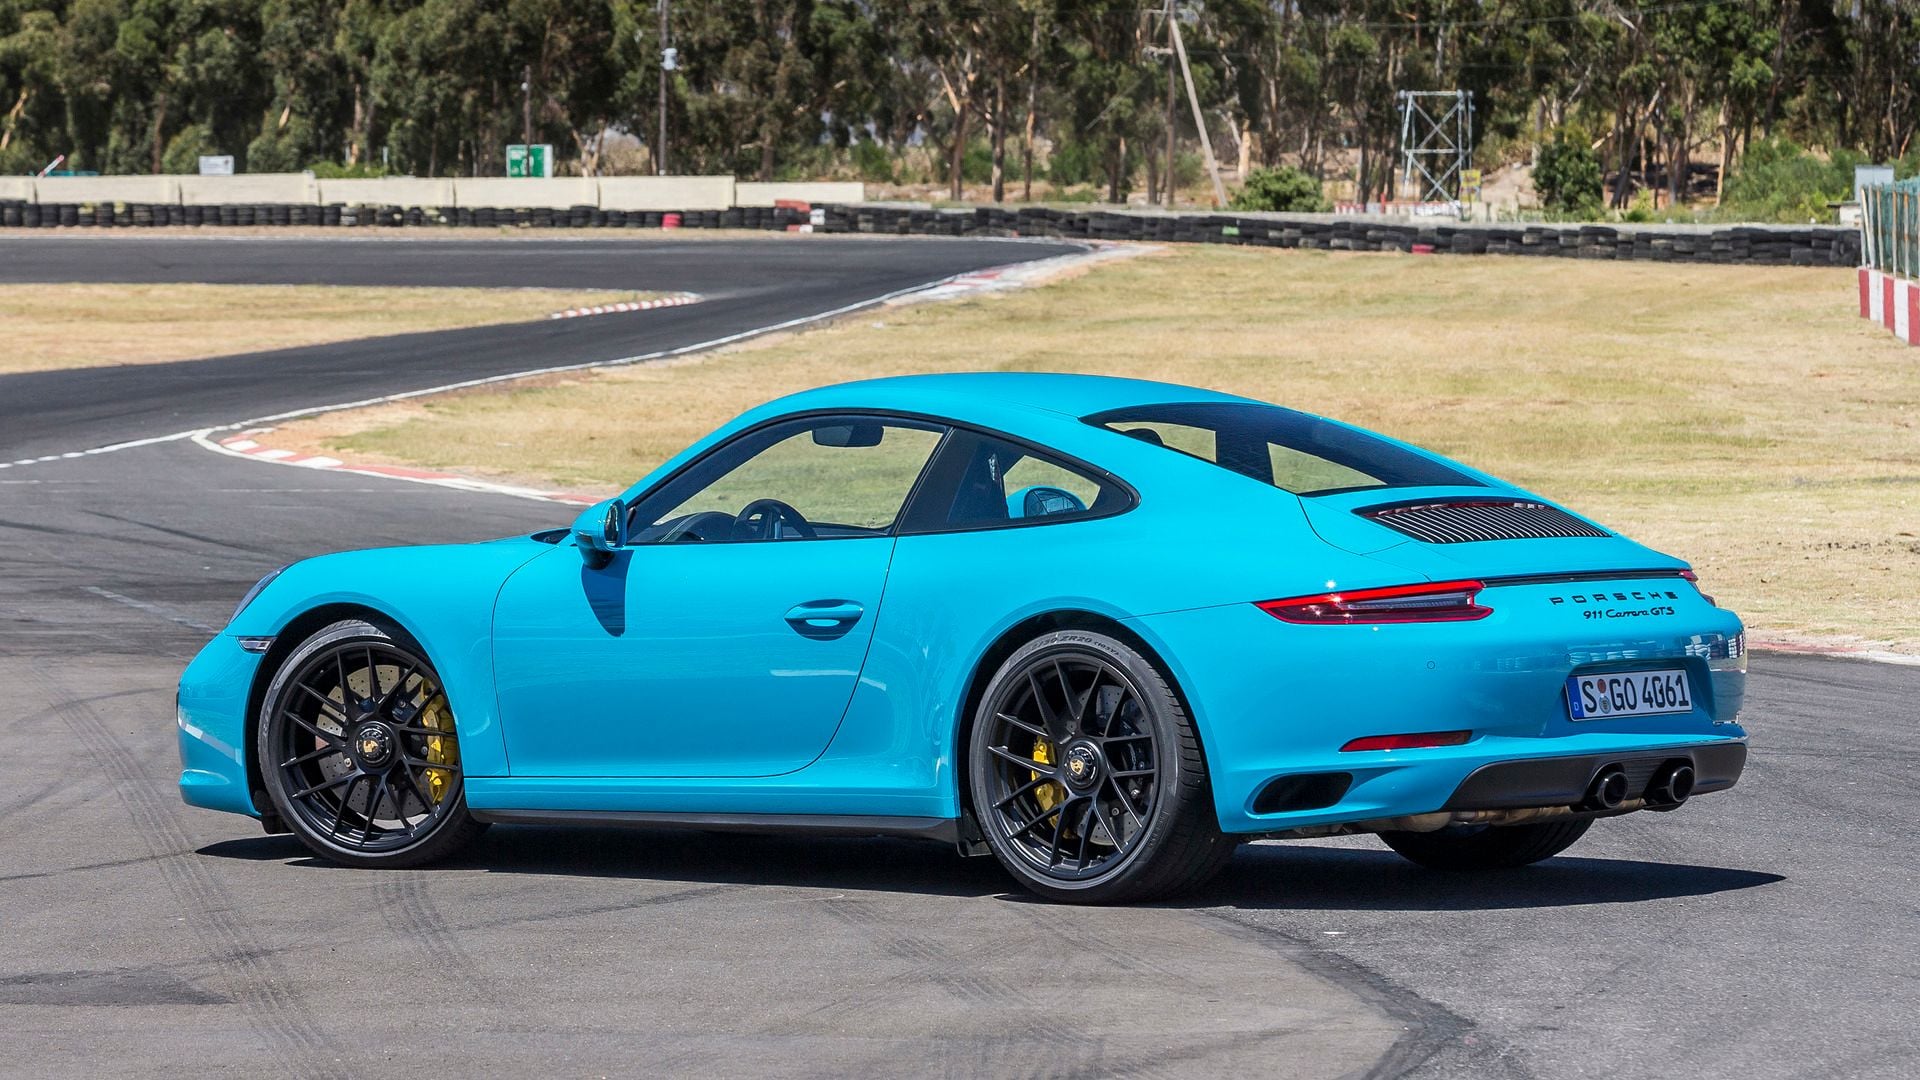 2017 - 2019 Porsche 911 - WTB: 2017-19 911 GTS - Used - Scottsdale, AZ 85255, United States